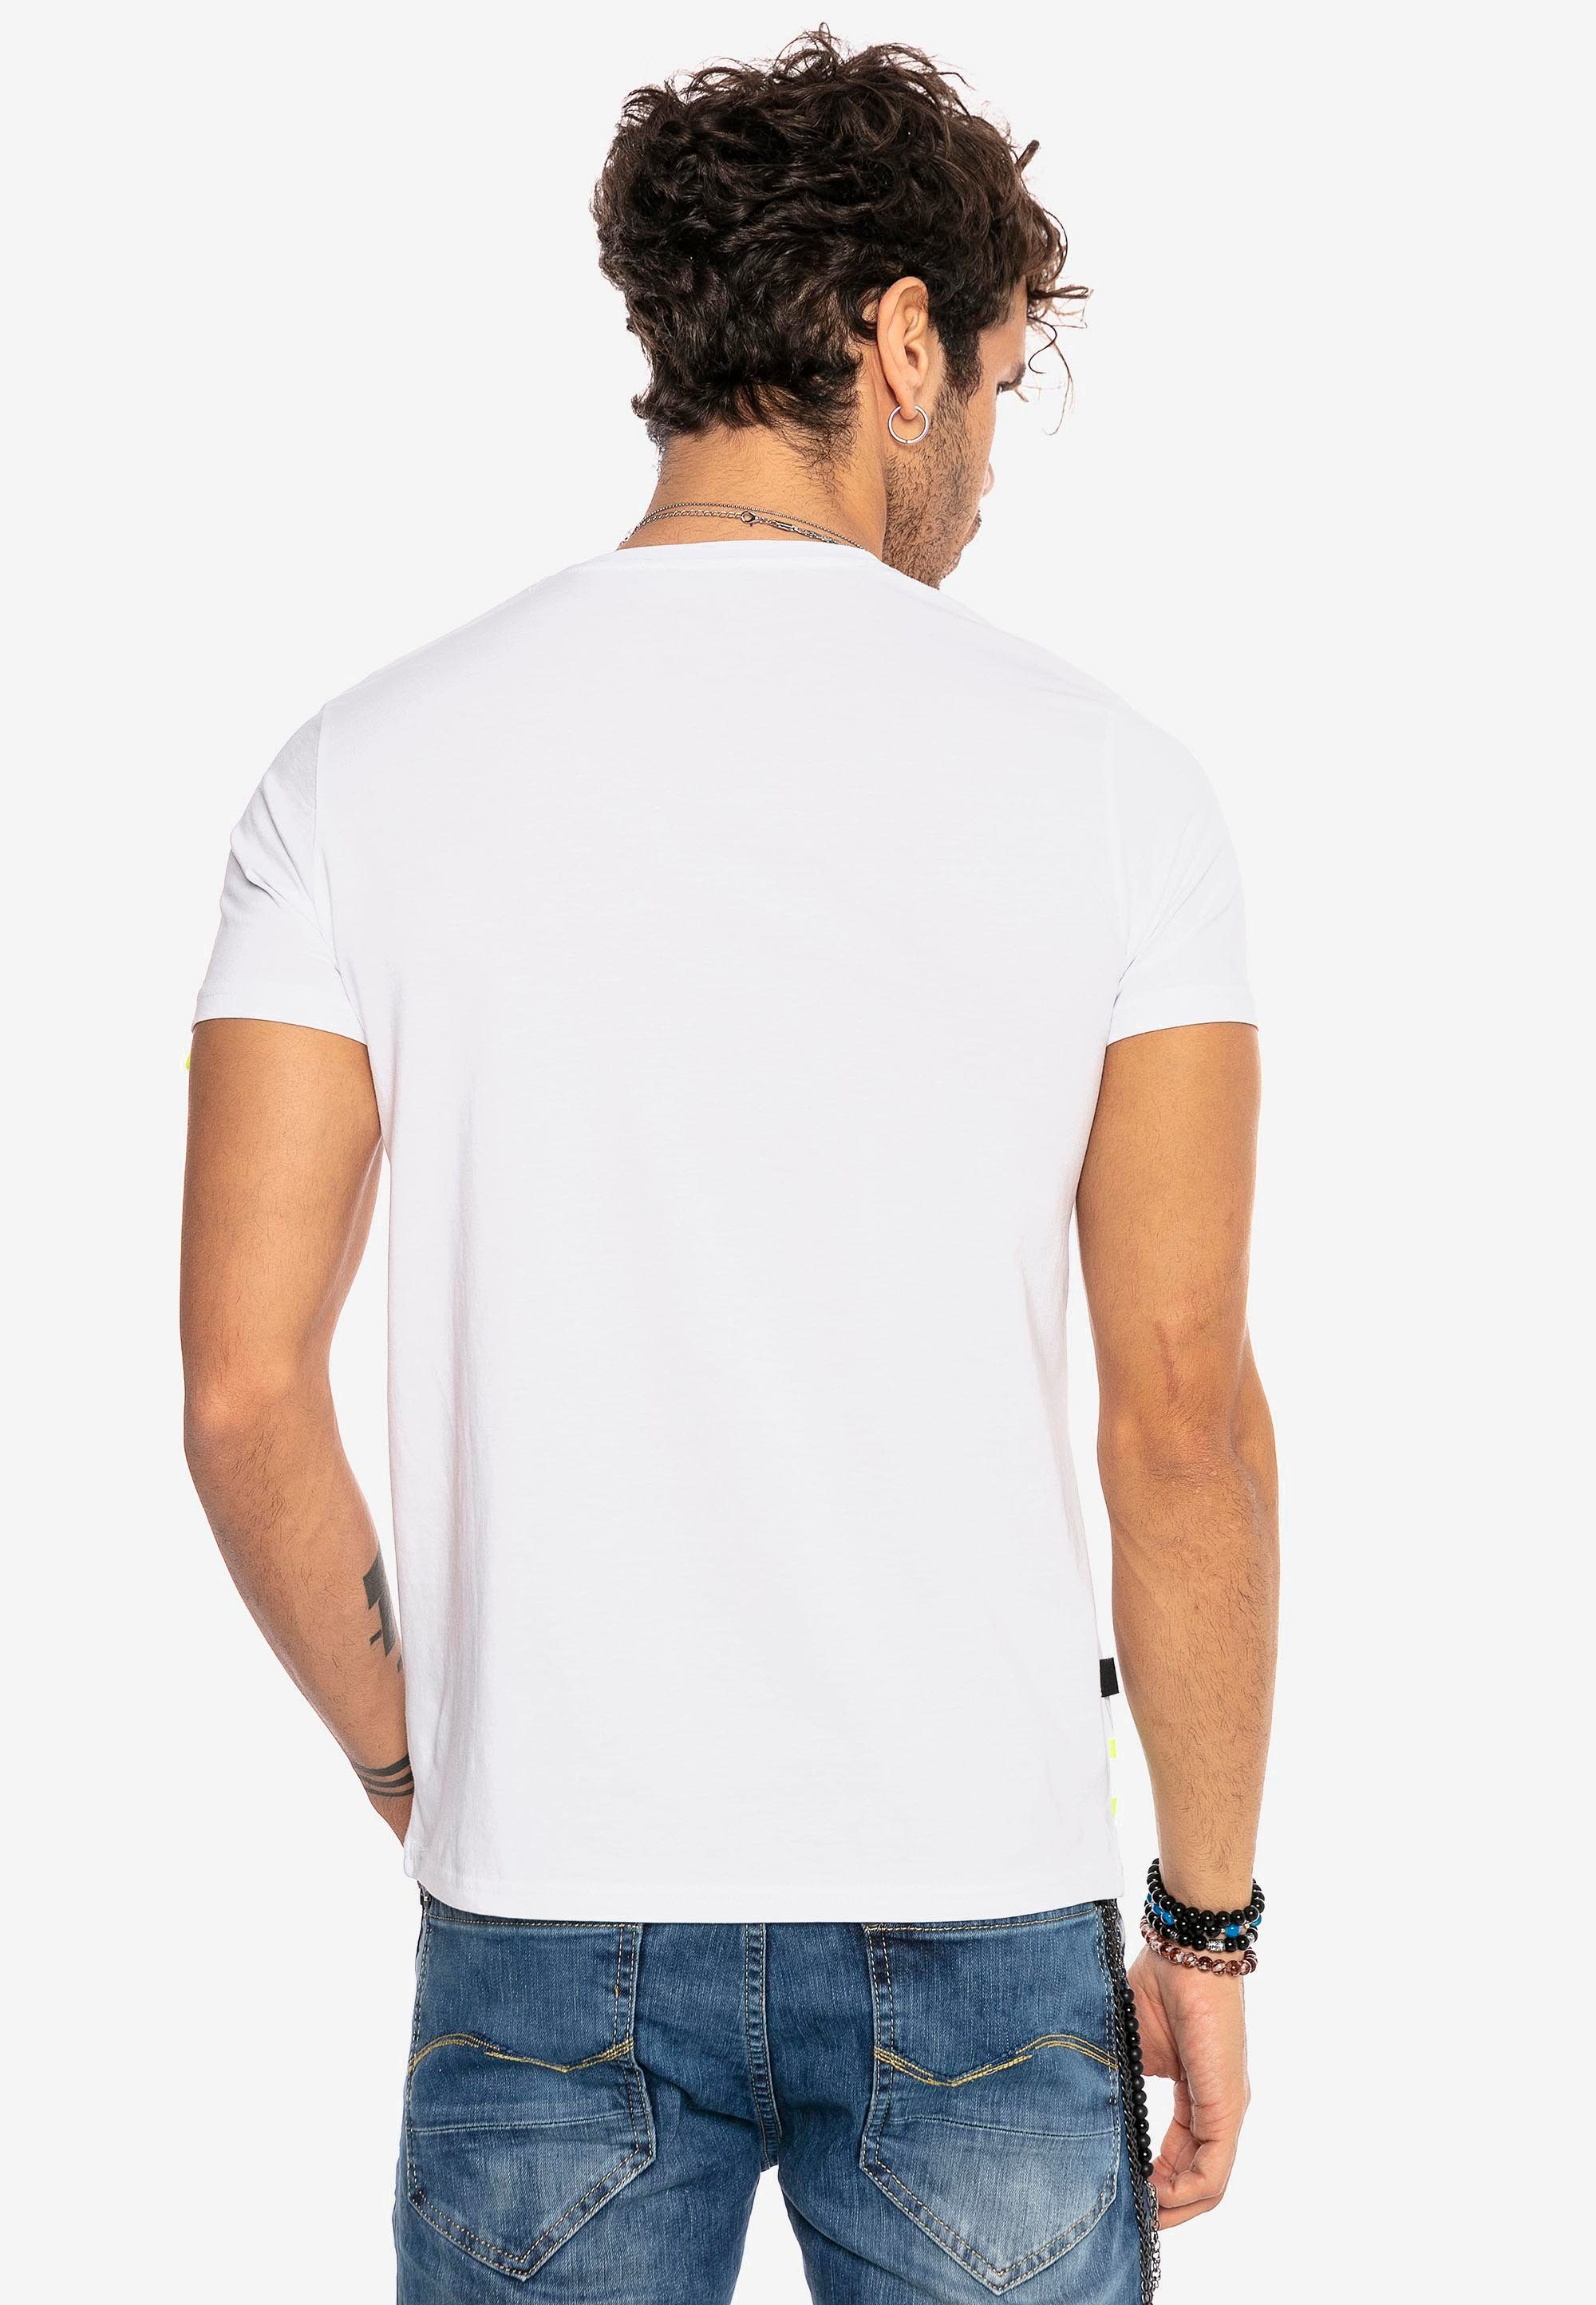 RedBridge T-Shirt Visalia modischem NASA-Print mit weiß